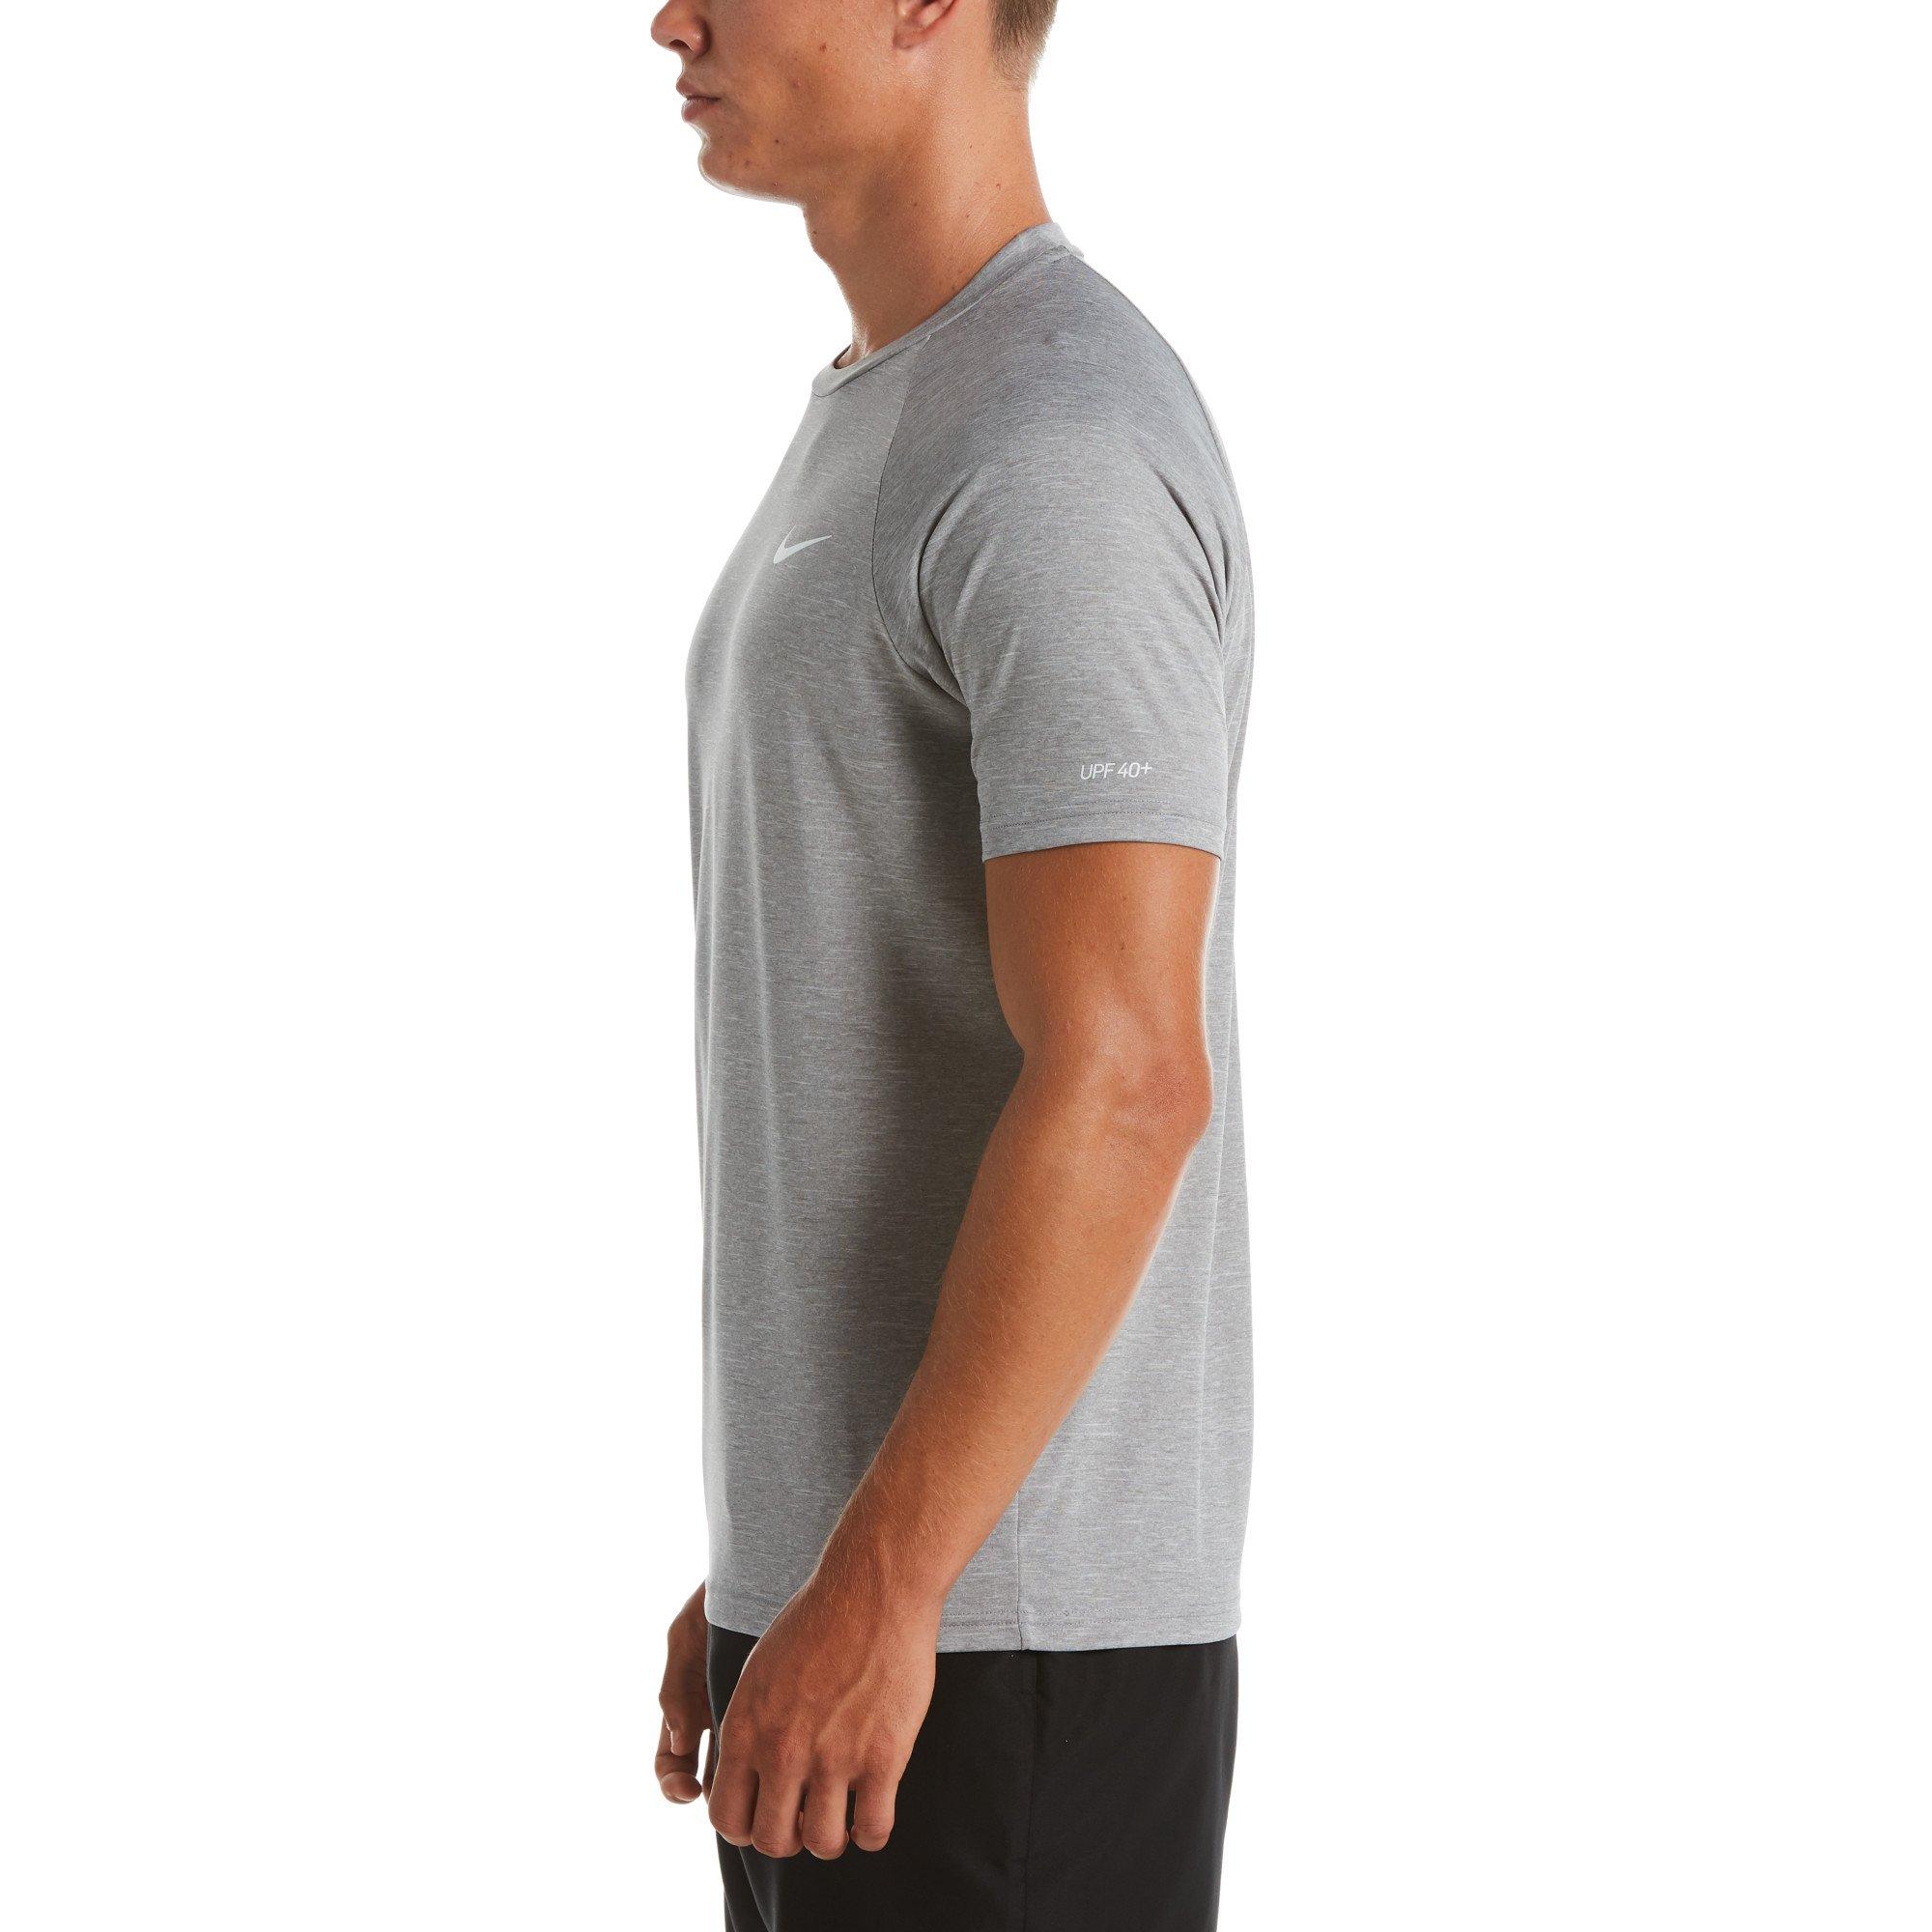 Nike Men's Heather Short Sleeve Hydroguard "Grey" Shirt